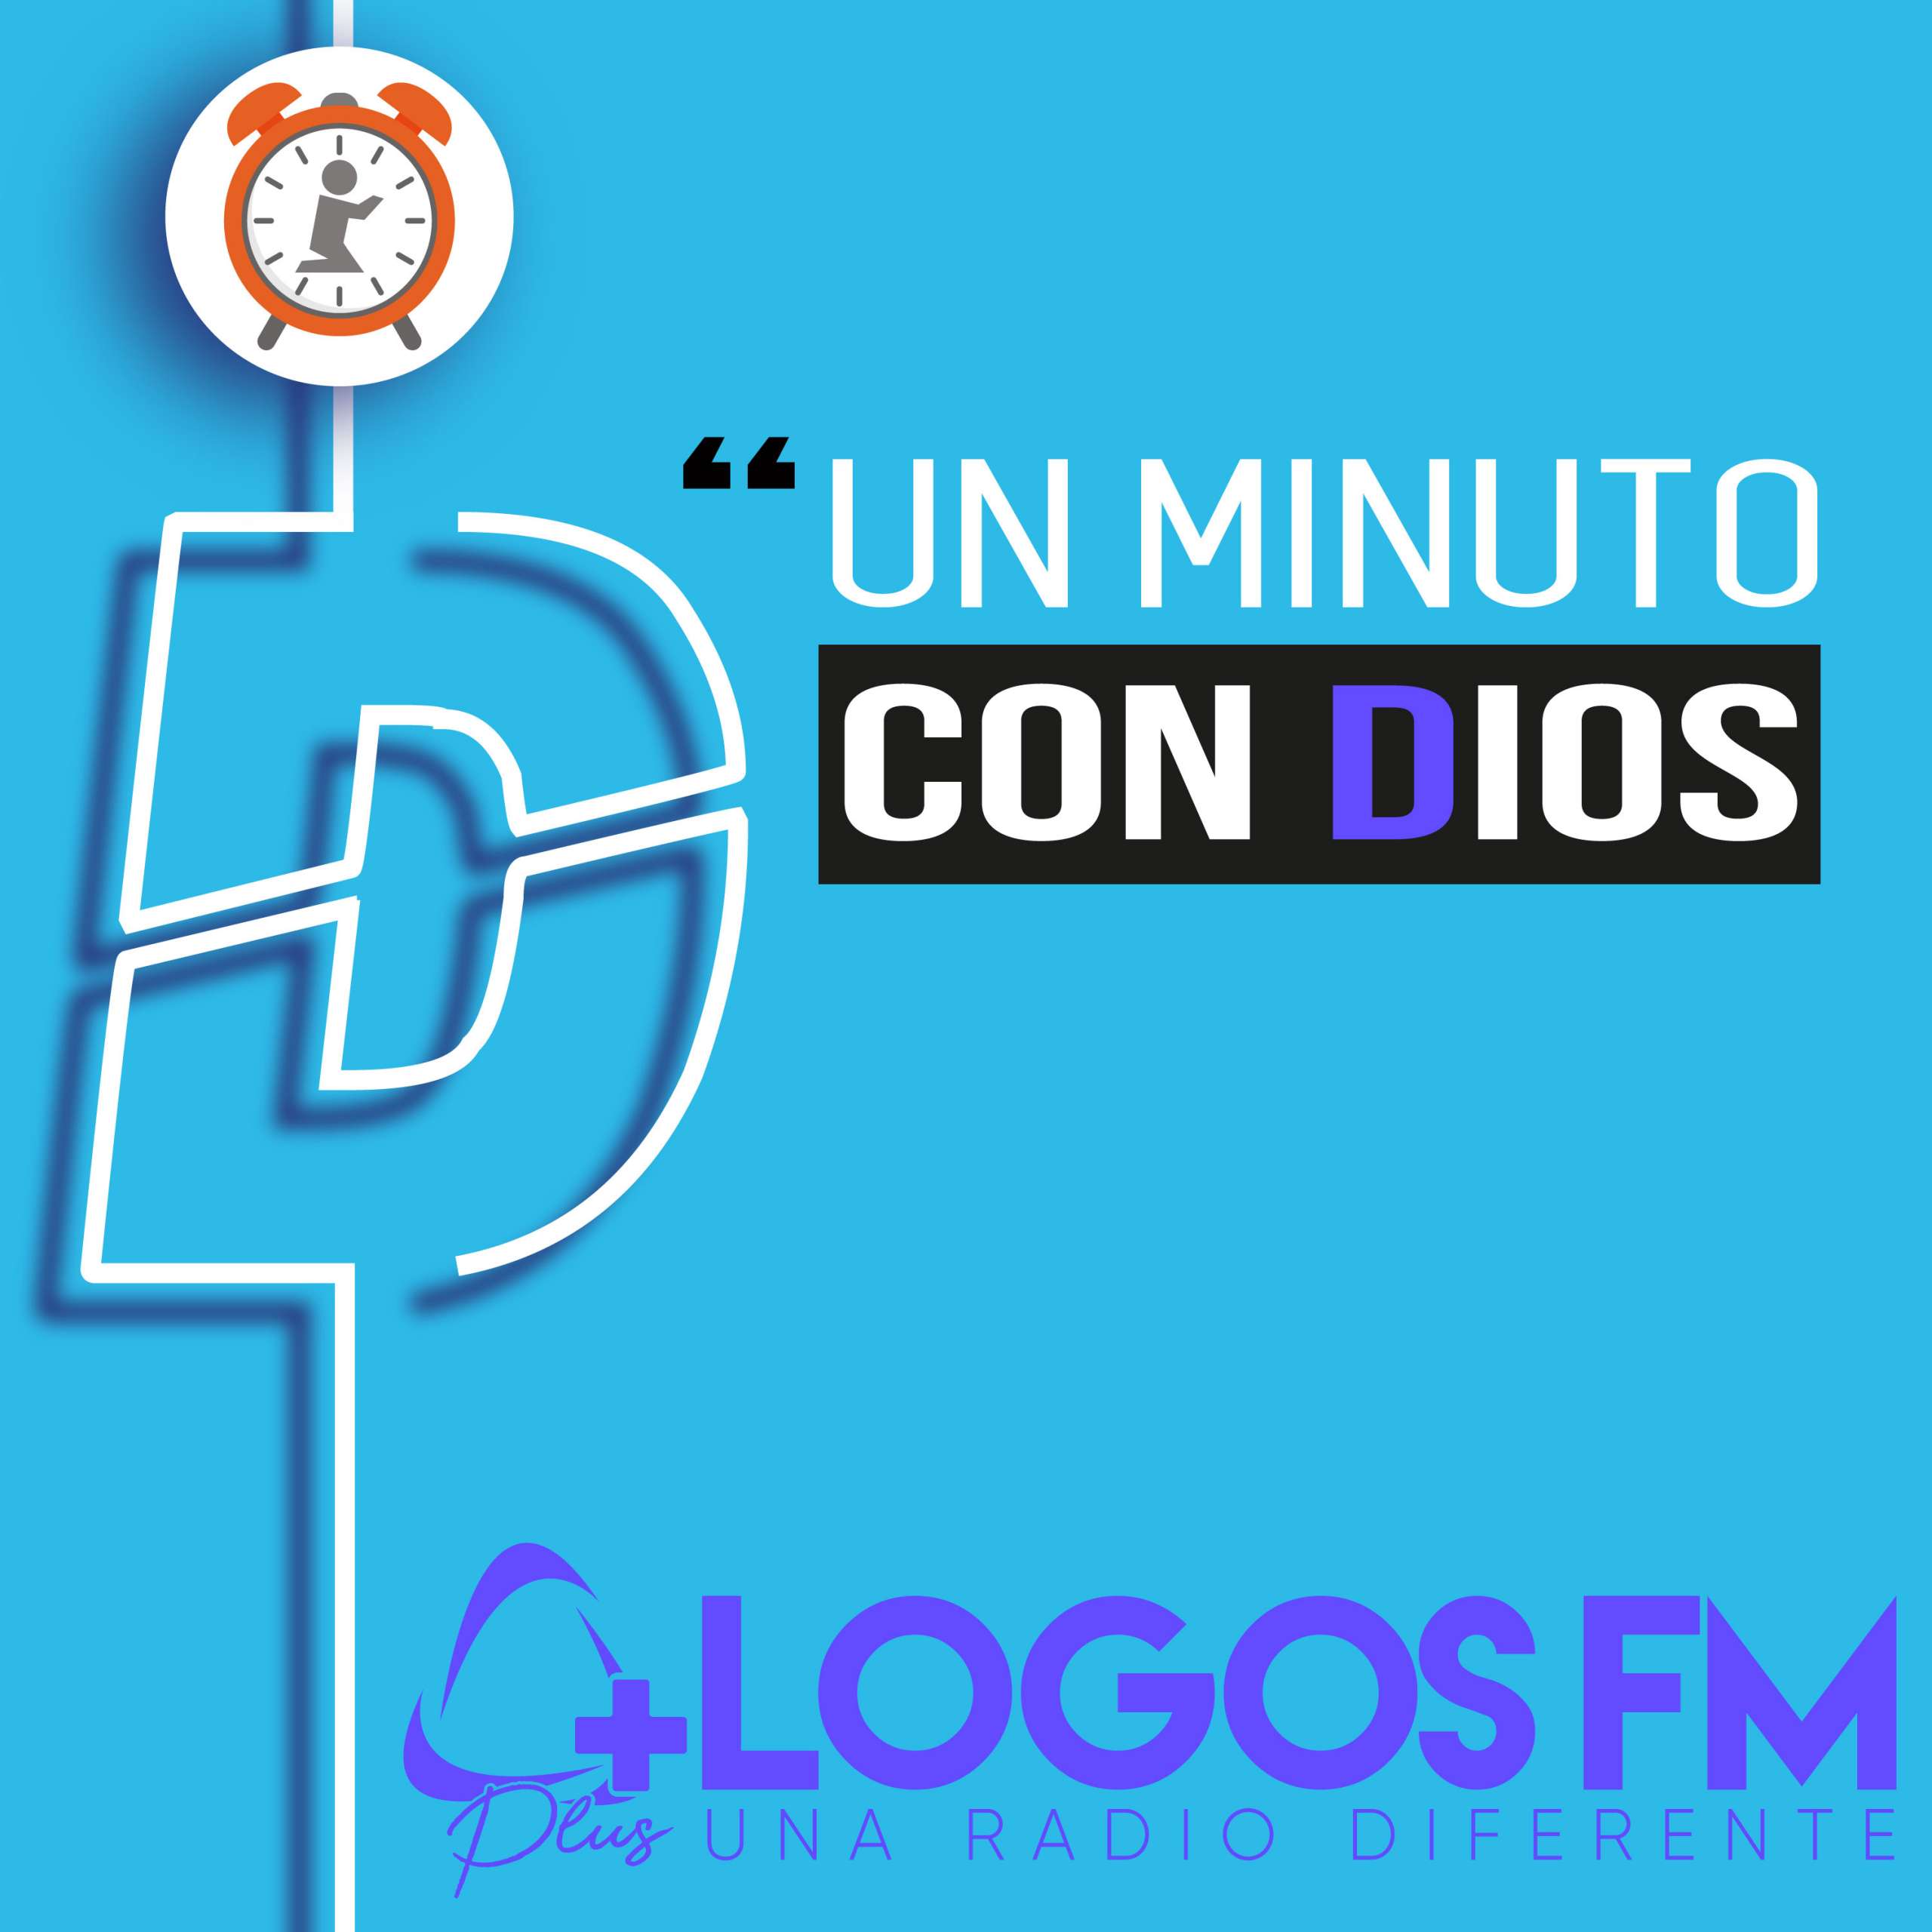 Un minuto con Dios - Episodio 392 - Loida Vargas